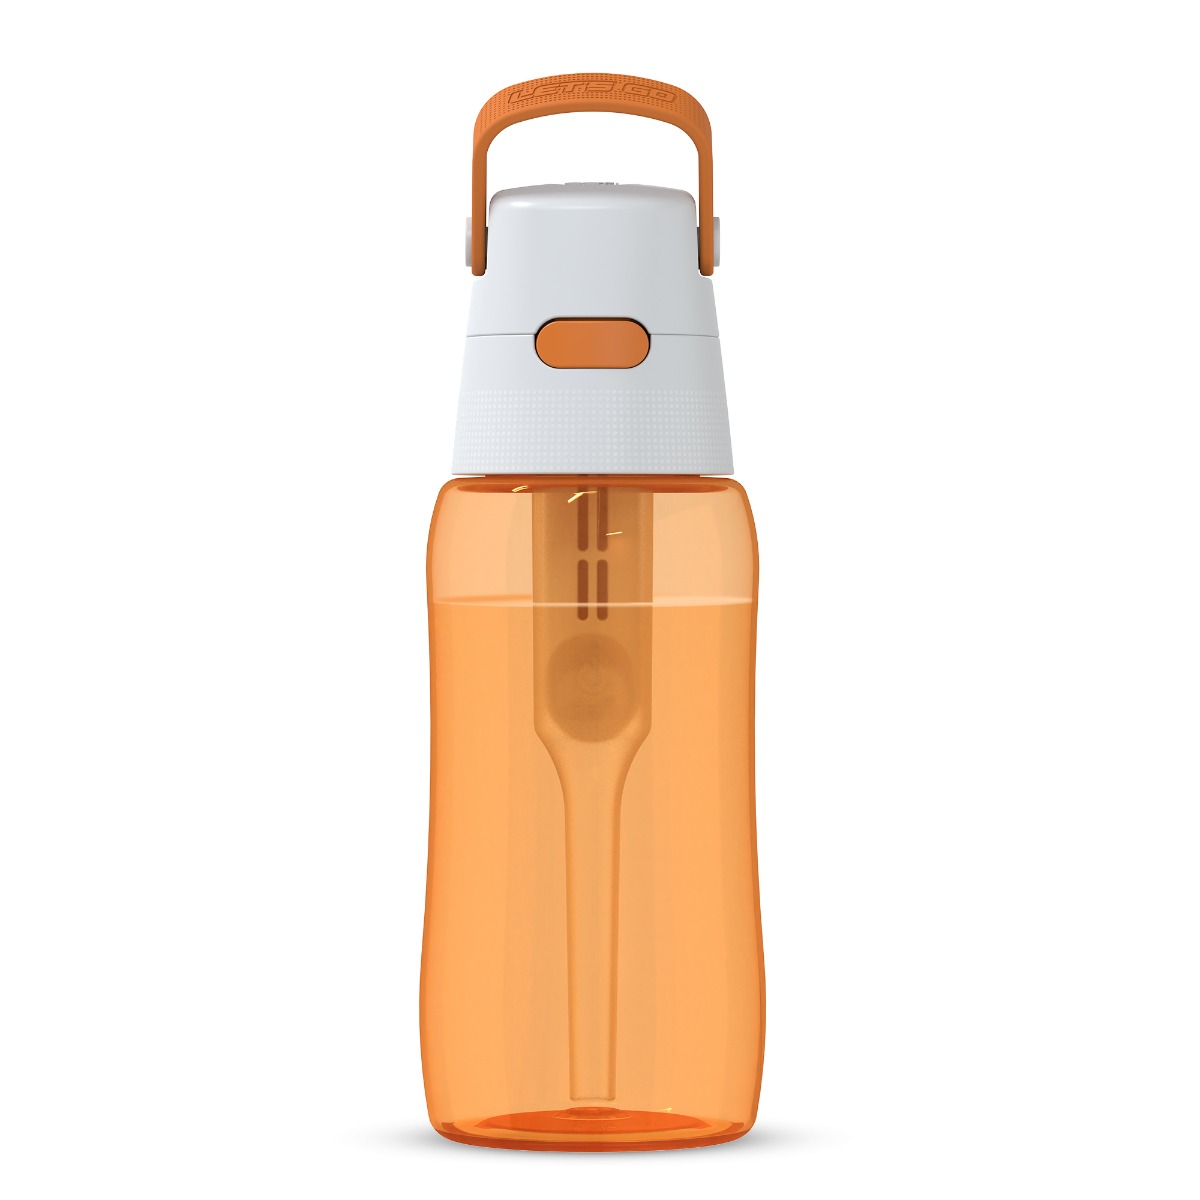 Butelka filtrująca Dafi SOLID 0,5 l bursztynowa barwiony zbiornik z filtrem